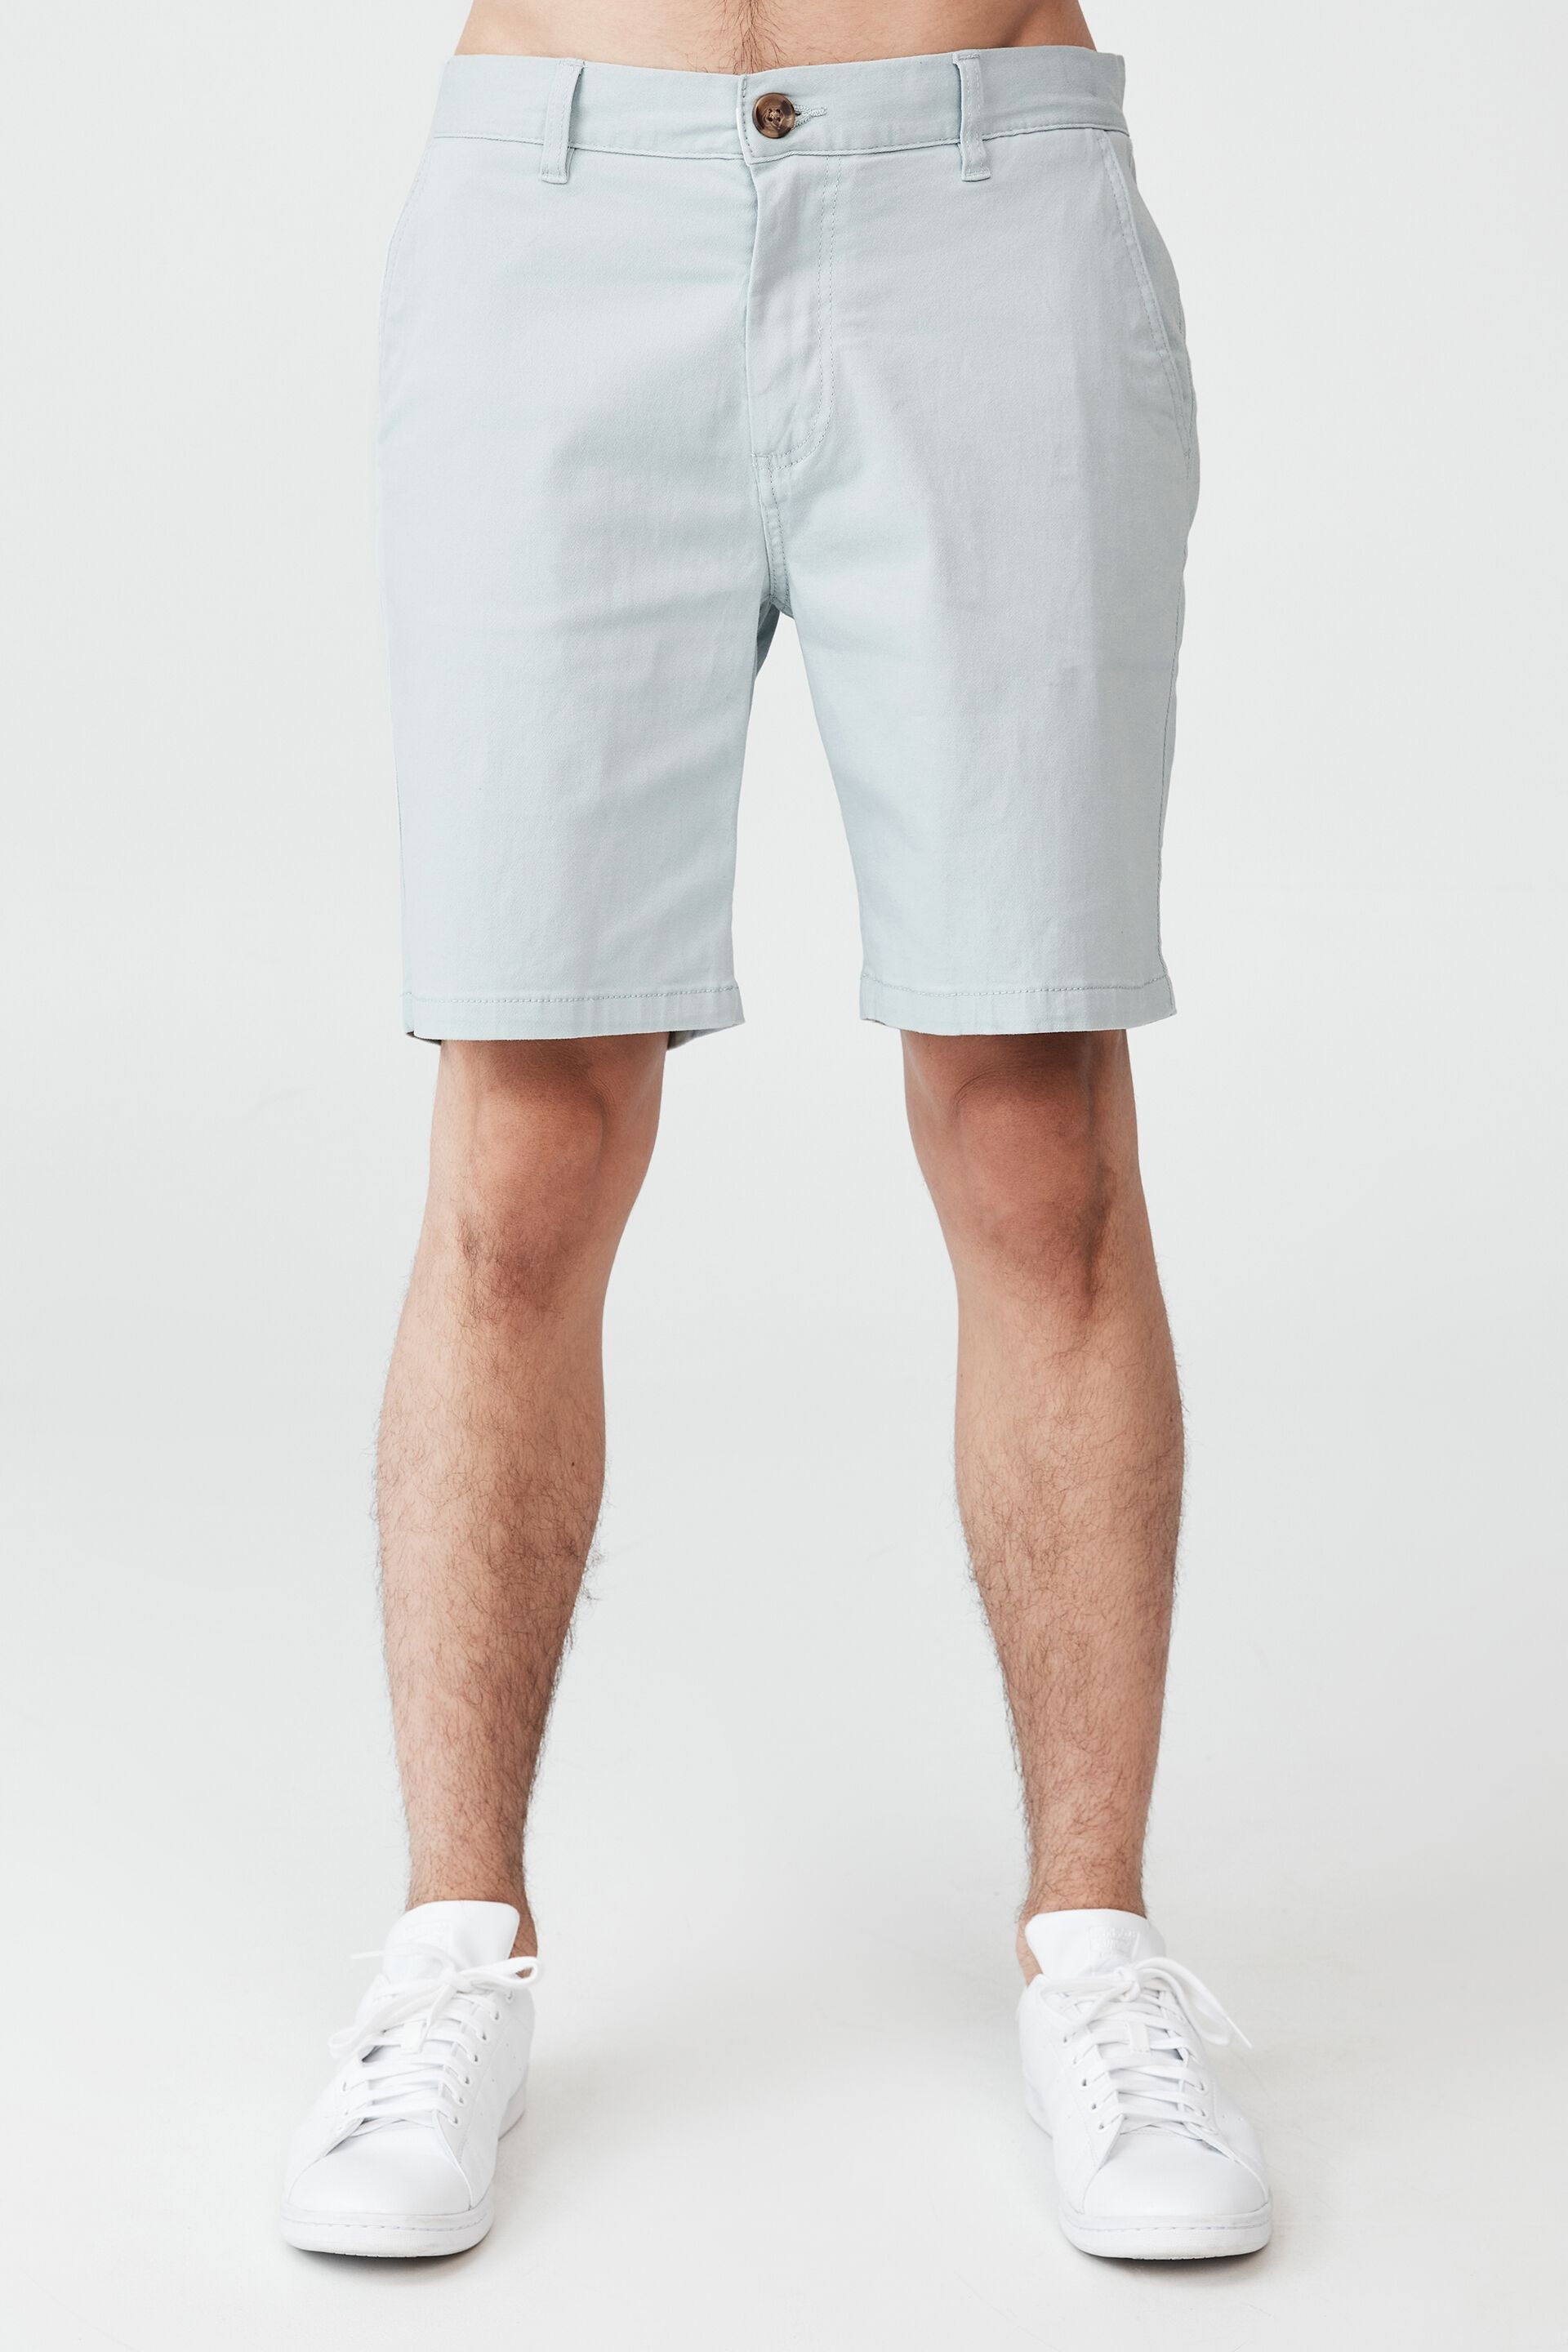 mens shorts cotton